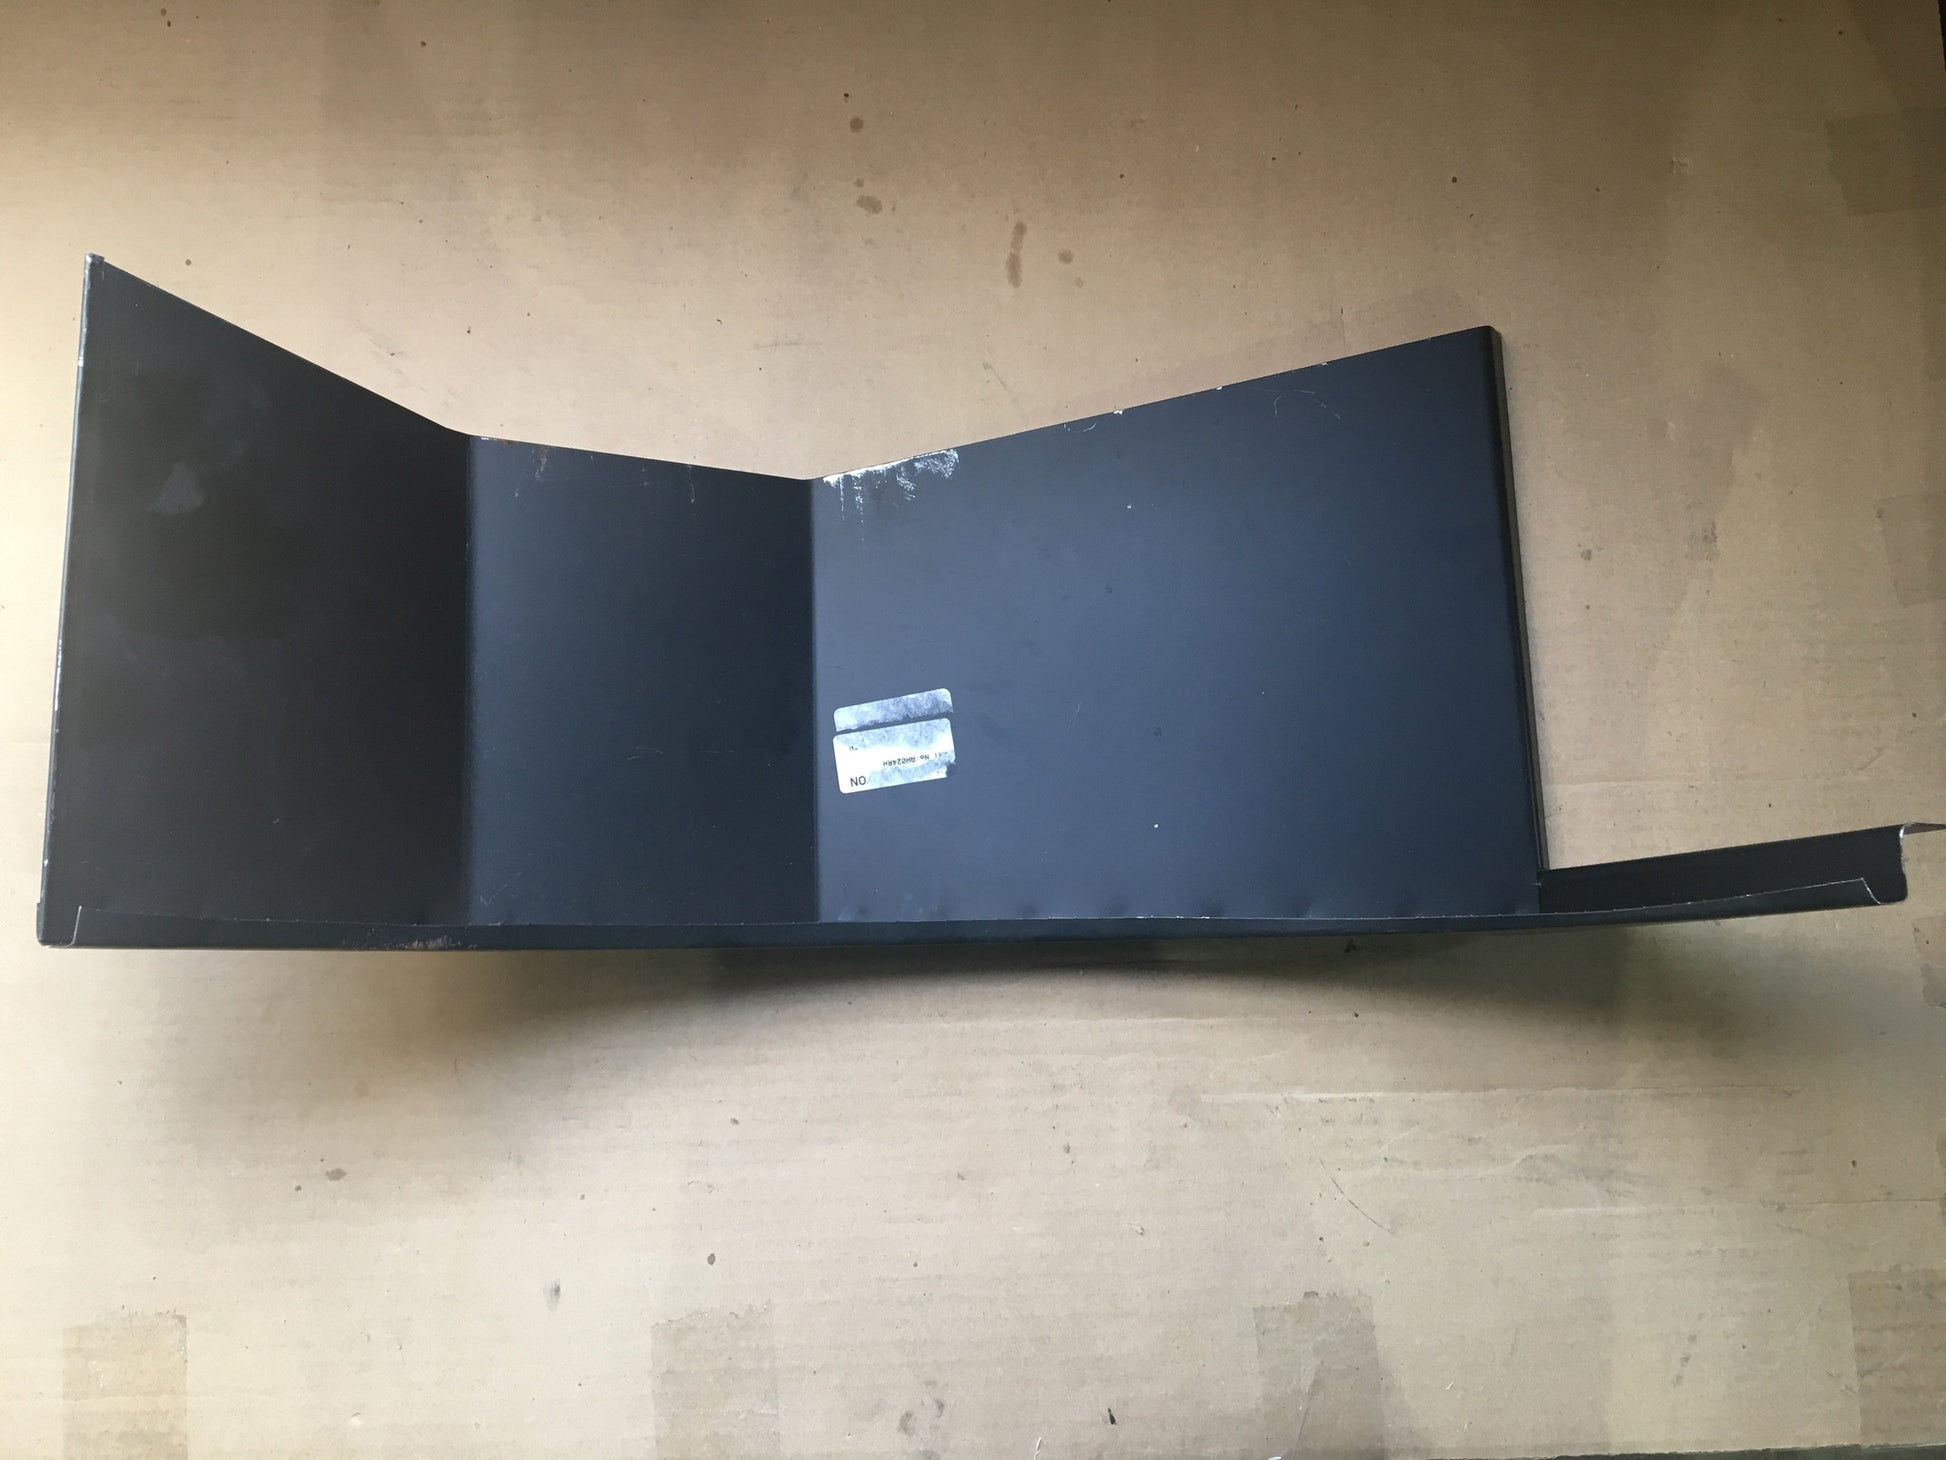 Austin Healey Sprite Inner Fender repair panel Body Panels - Bugeye